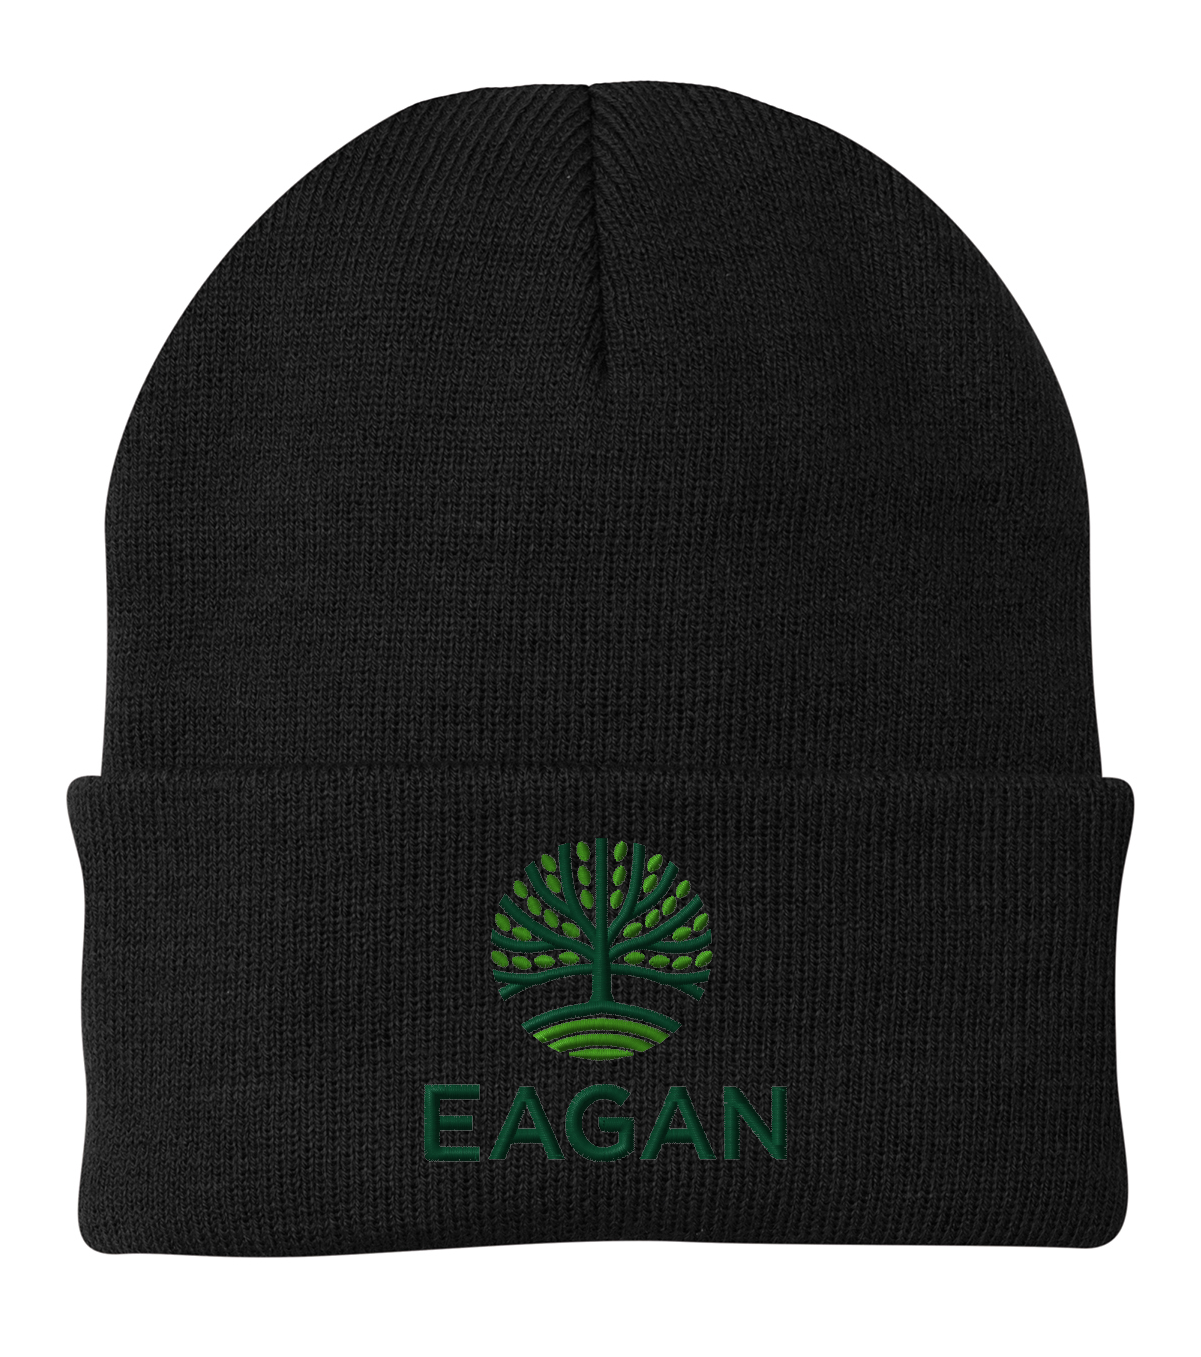 City of Eagan Port &amp; Company Knit Cap